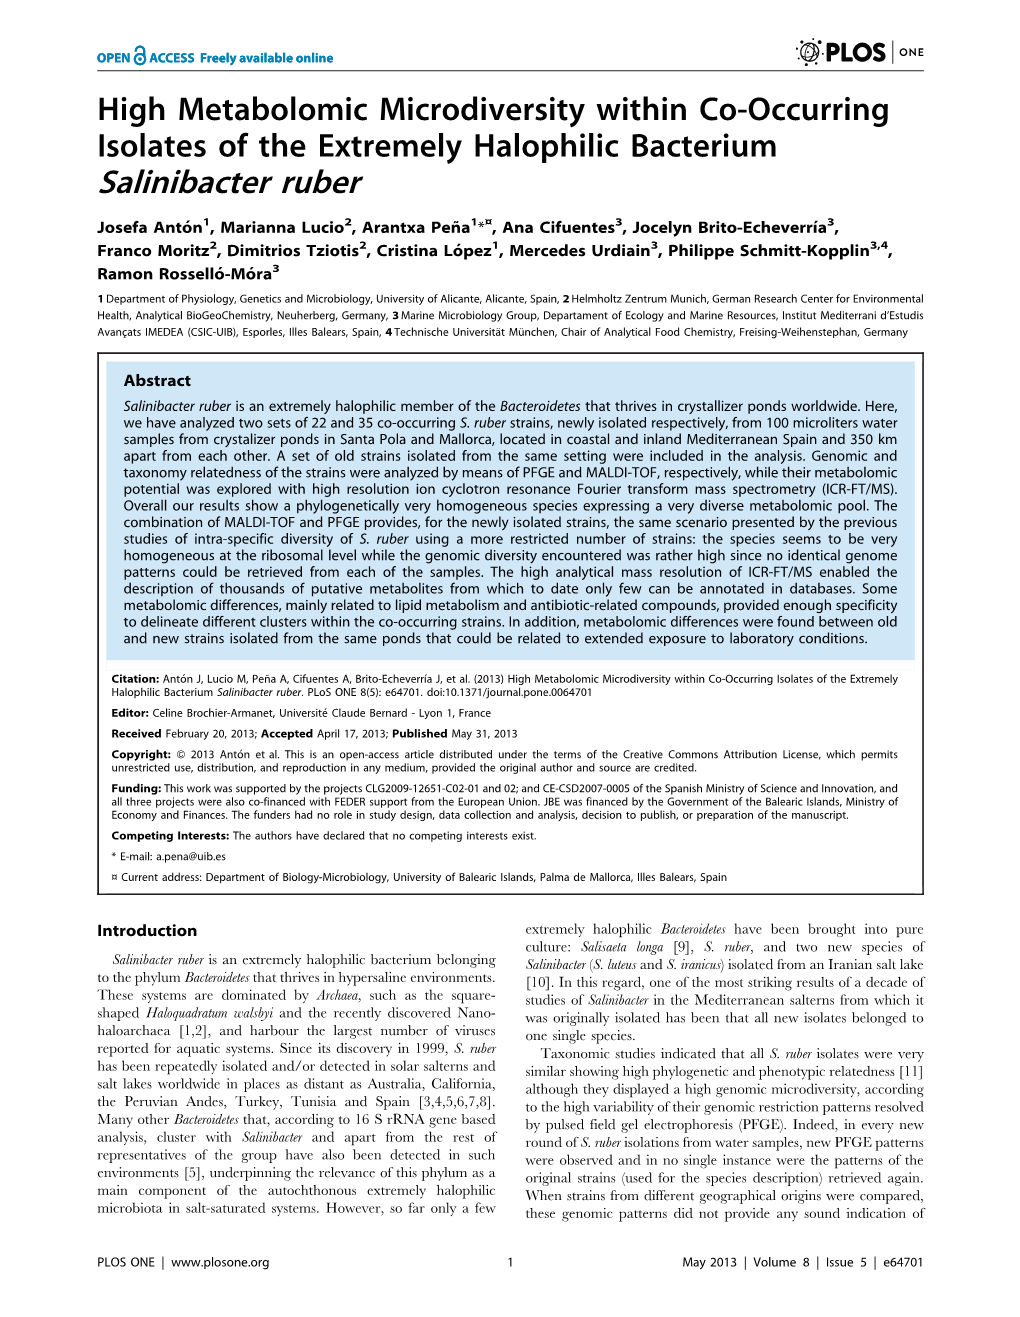 Salinibacter Ruber